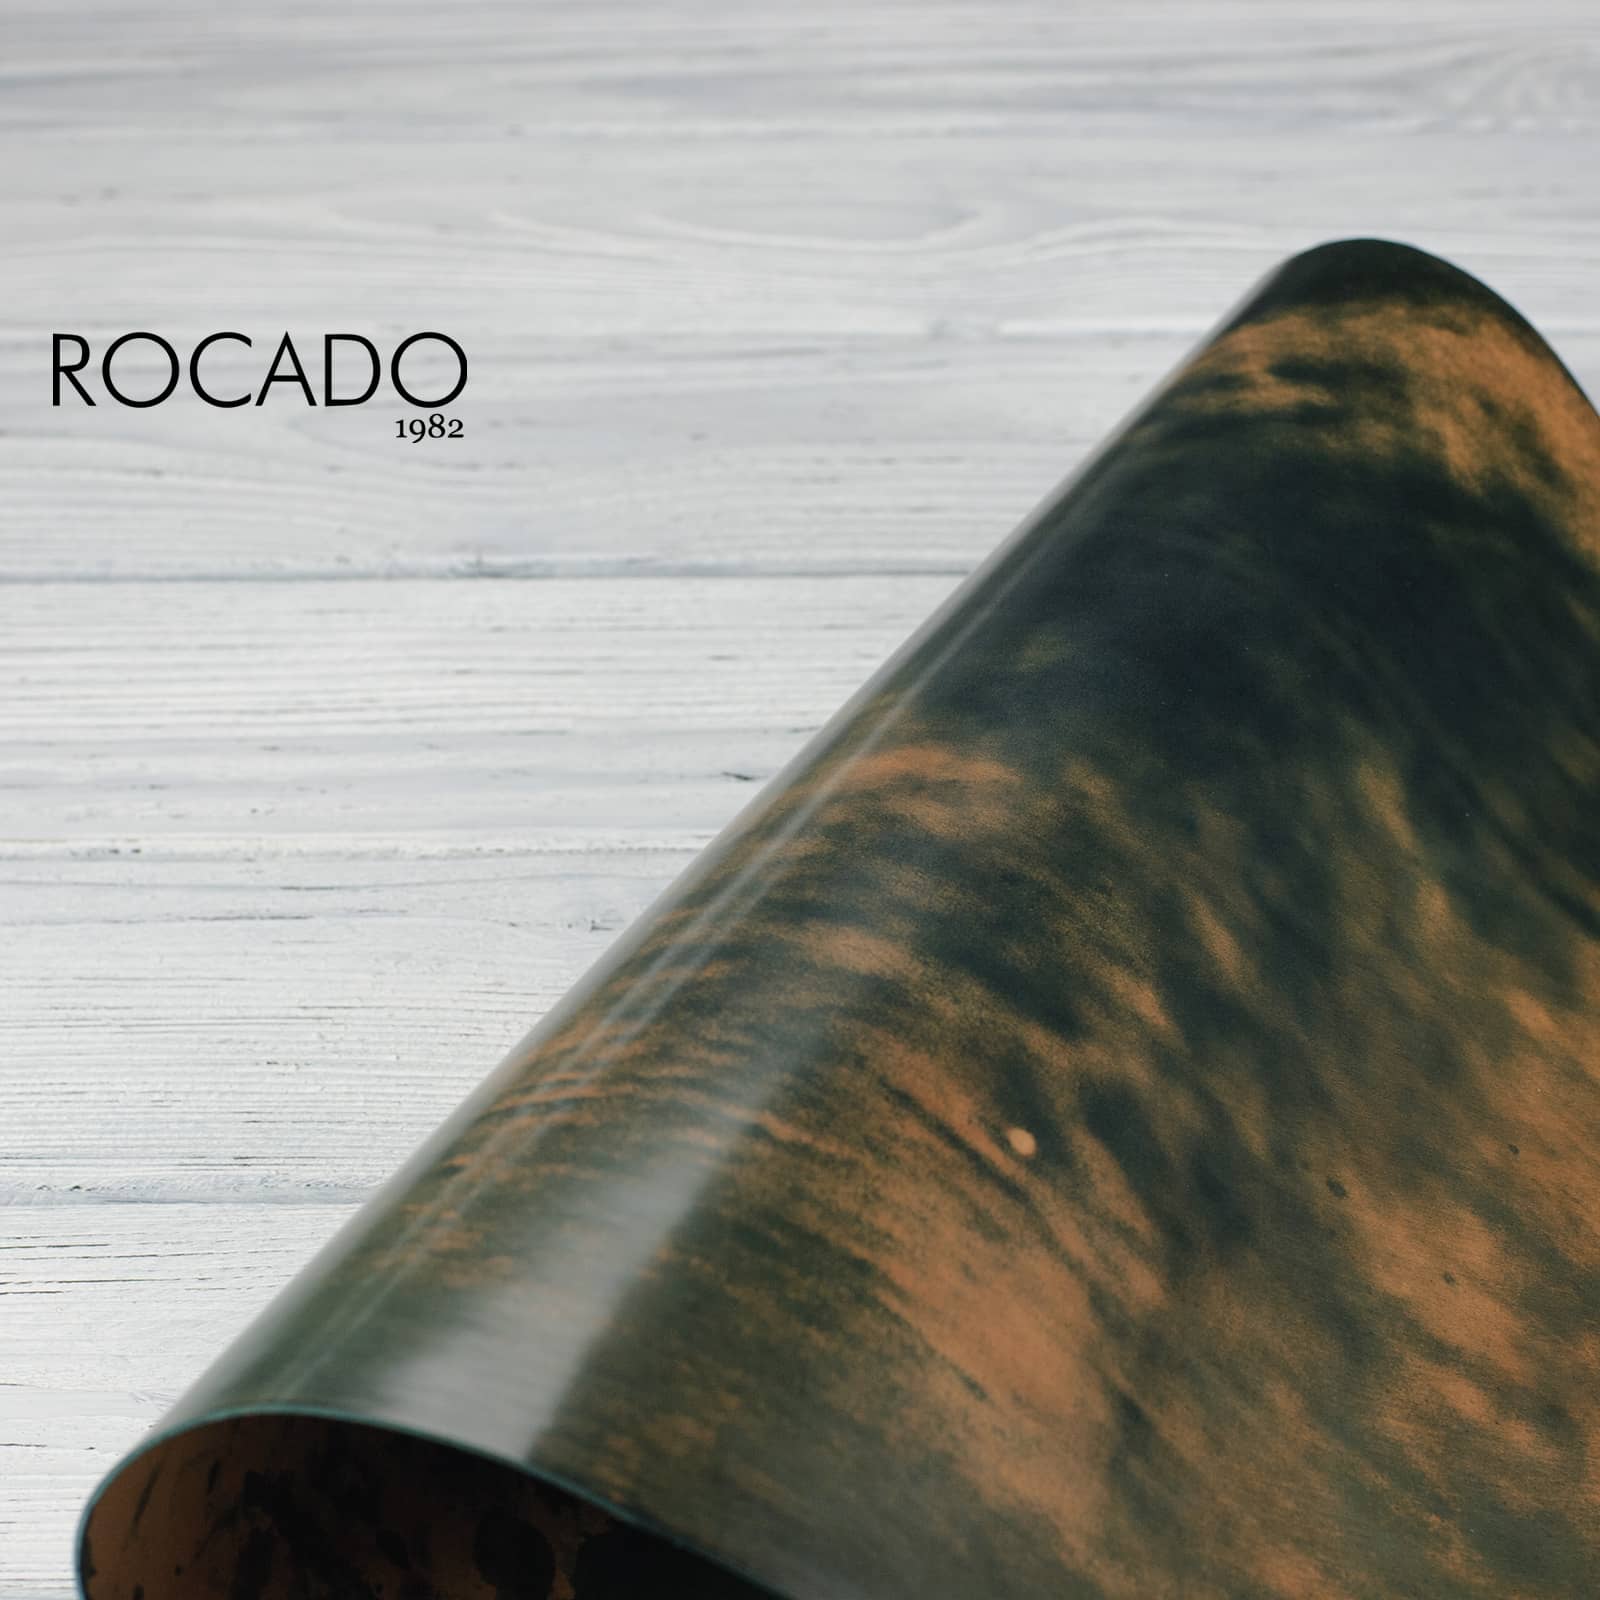 Rocado Marbled - Green